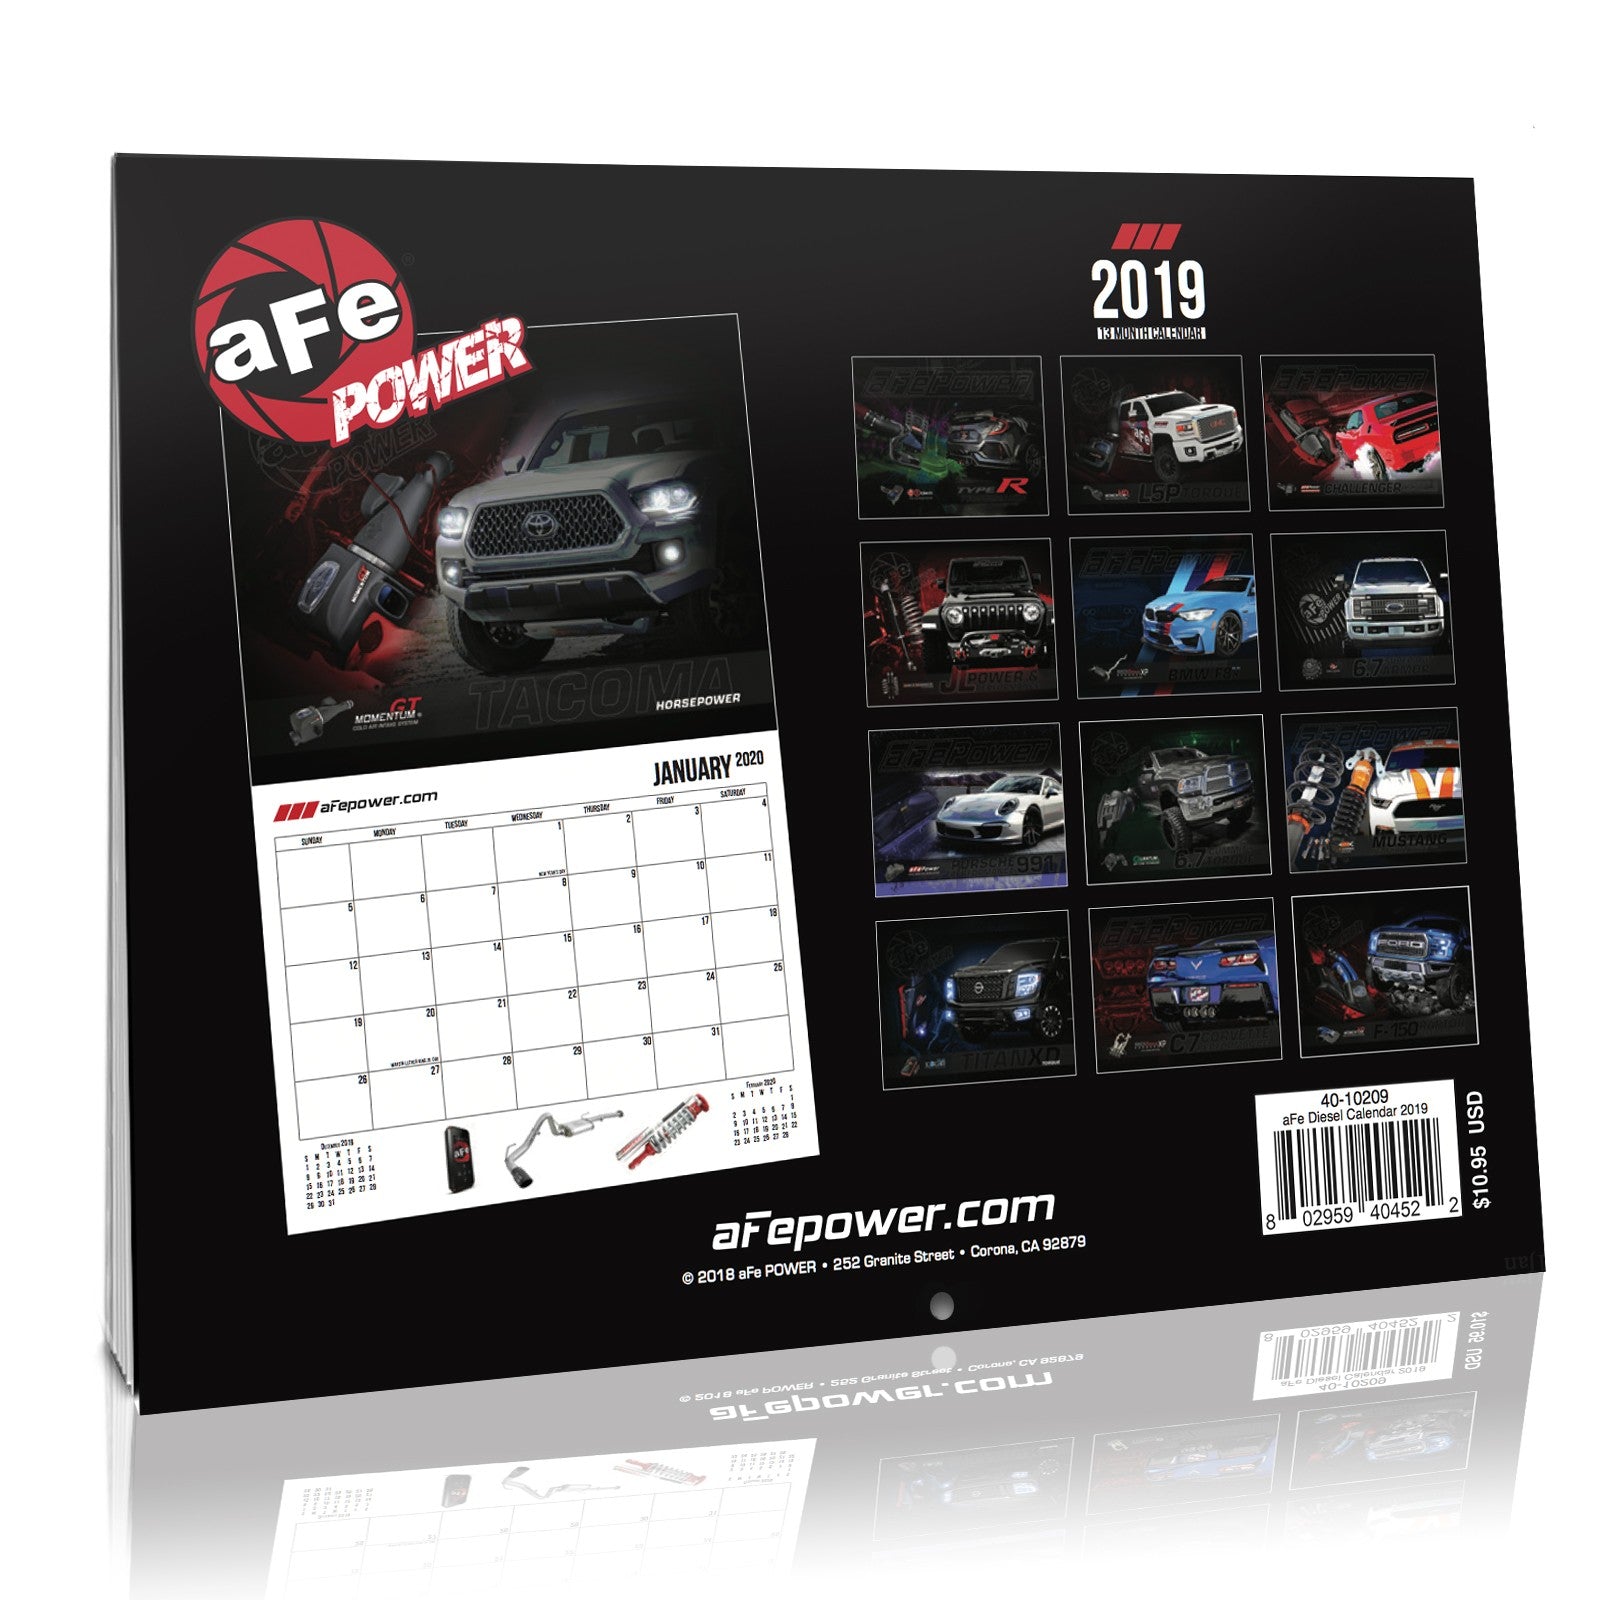 aFe Power Calendar 40-10209